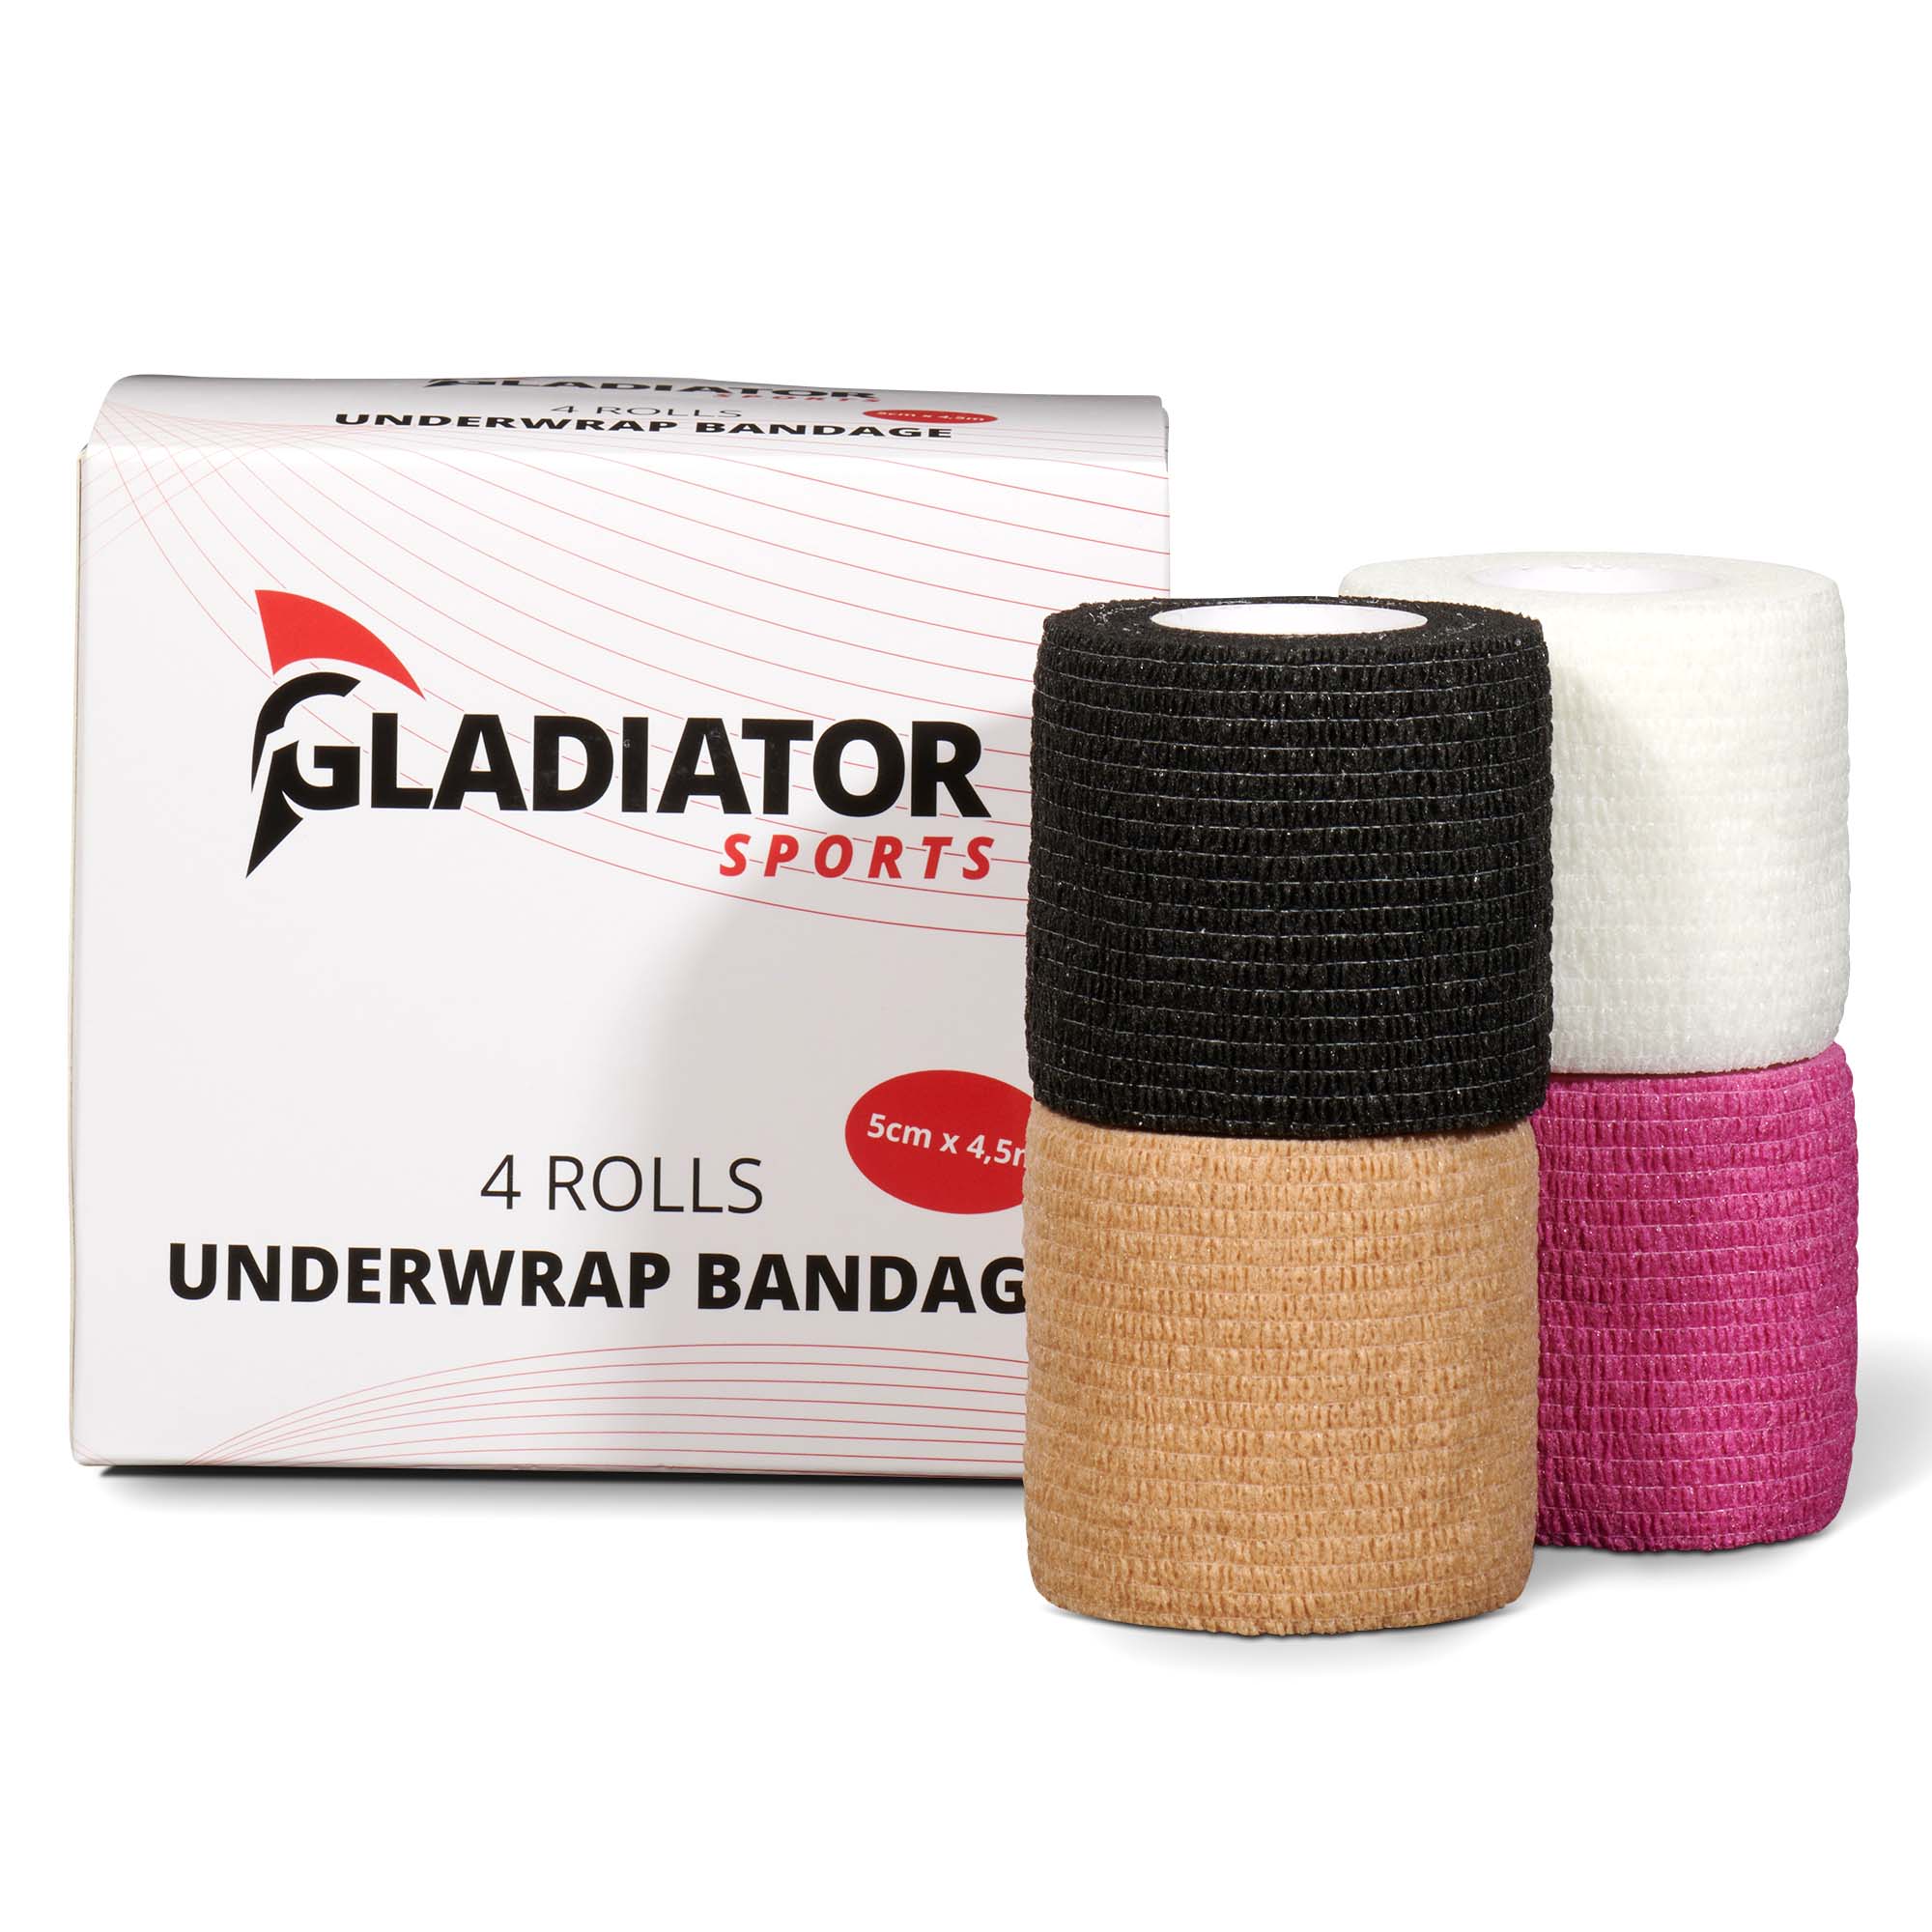 gladiator sports underwrap bandage 4 rolls with box 2